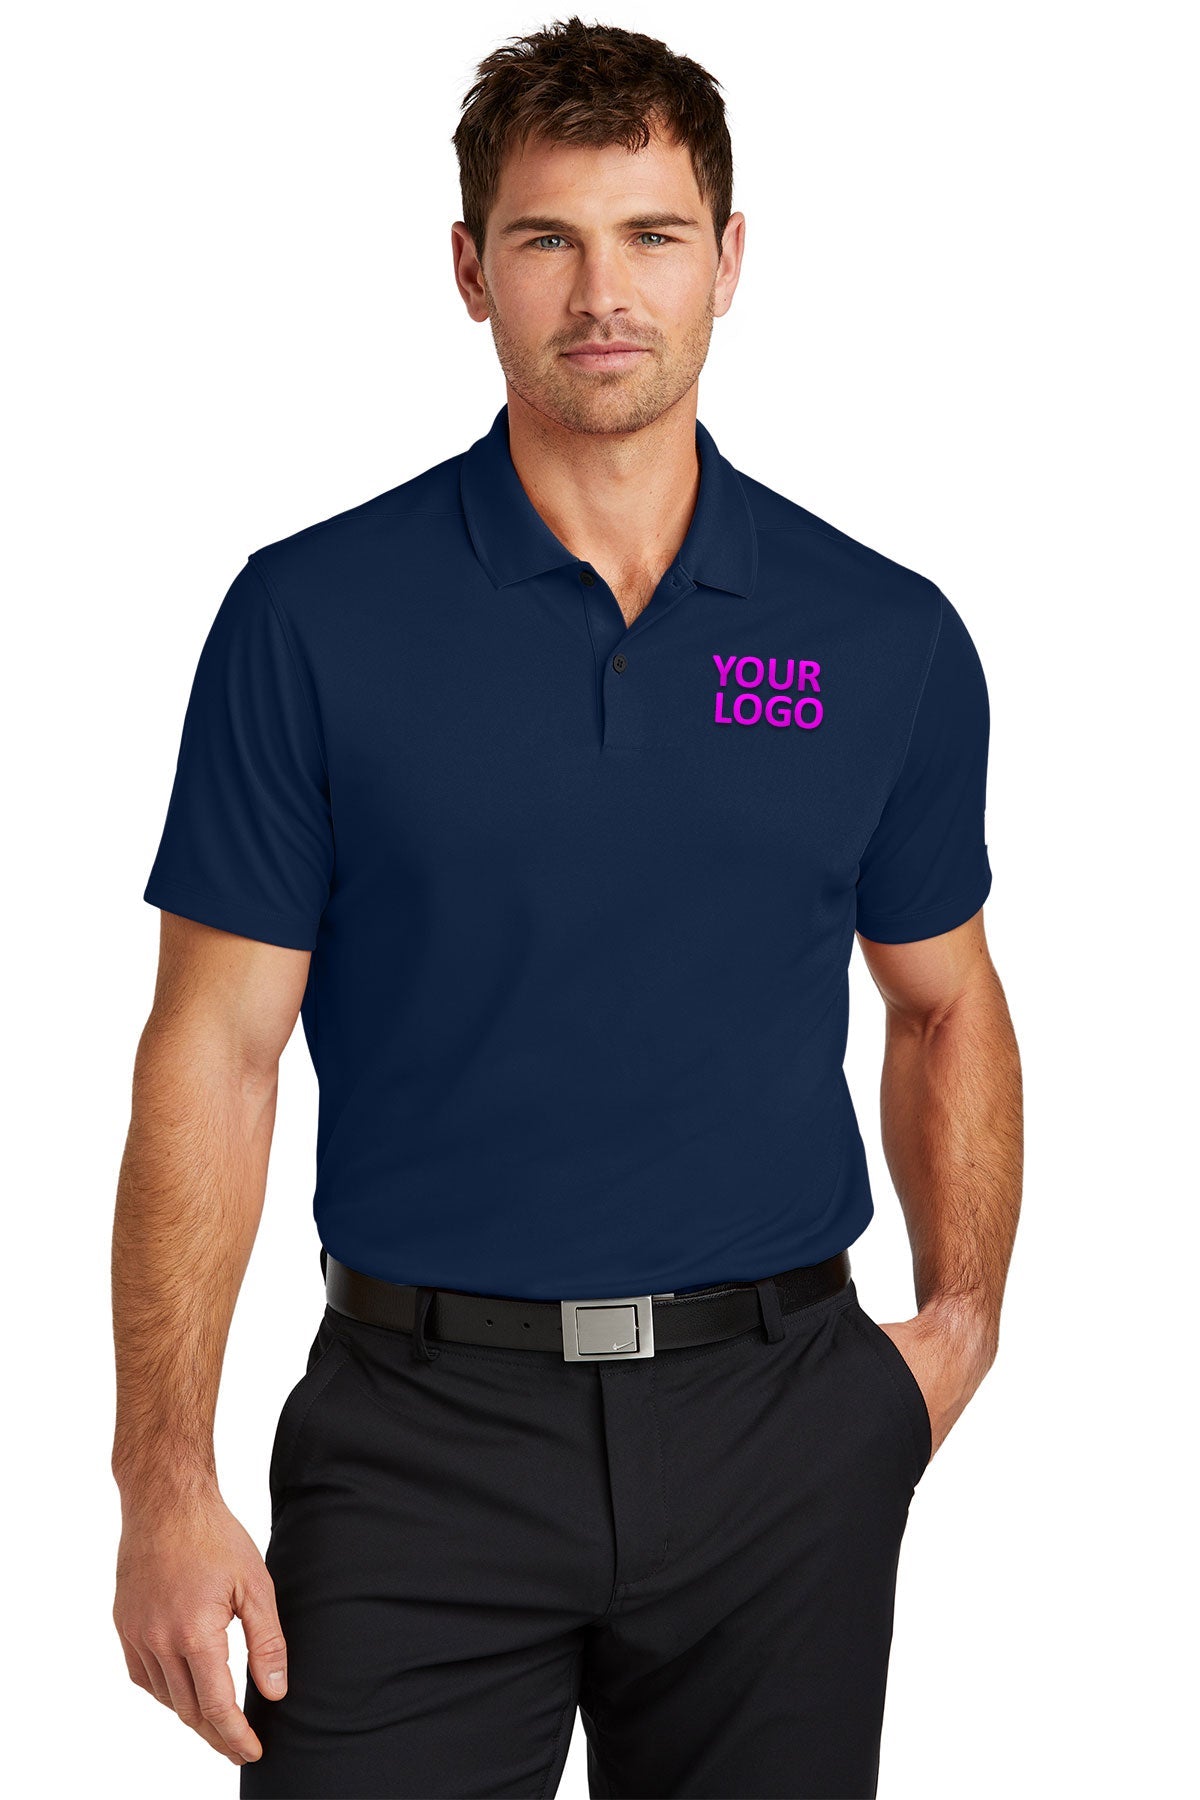 Nike College Navy NKDX6684 custom embroidered polo shirts